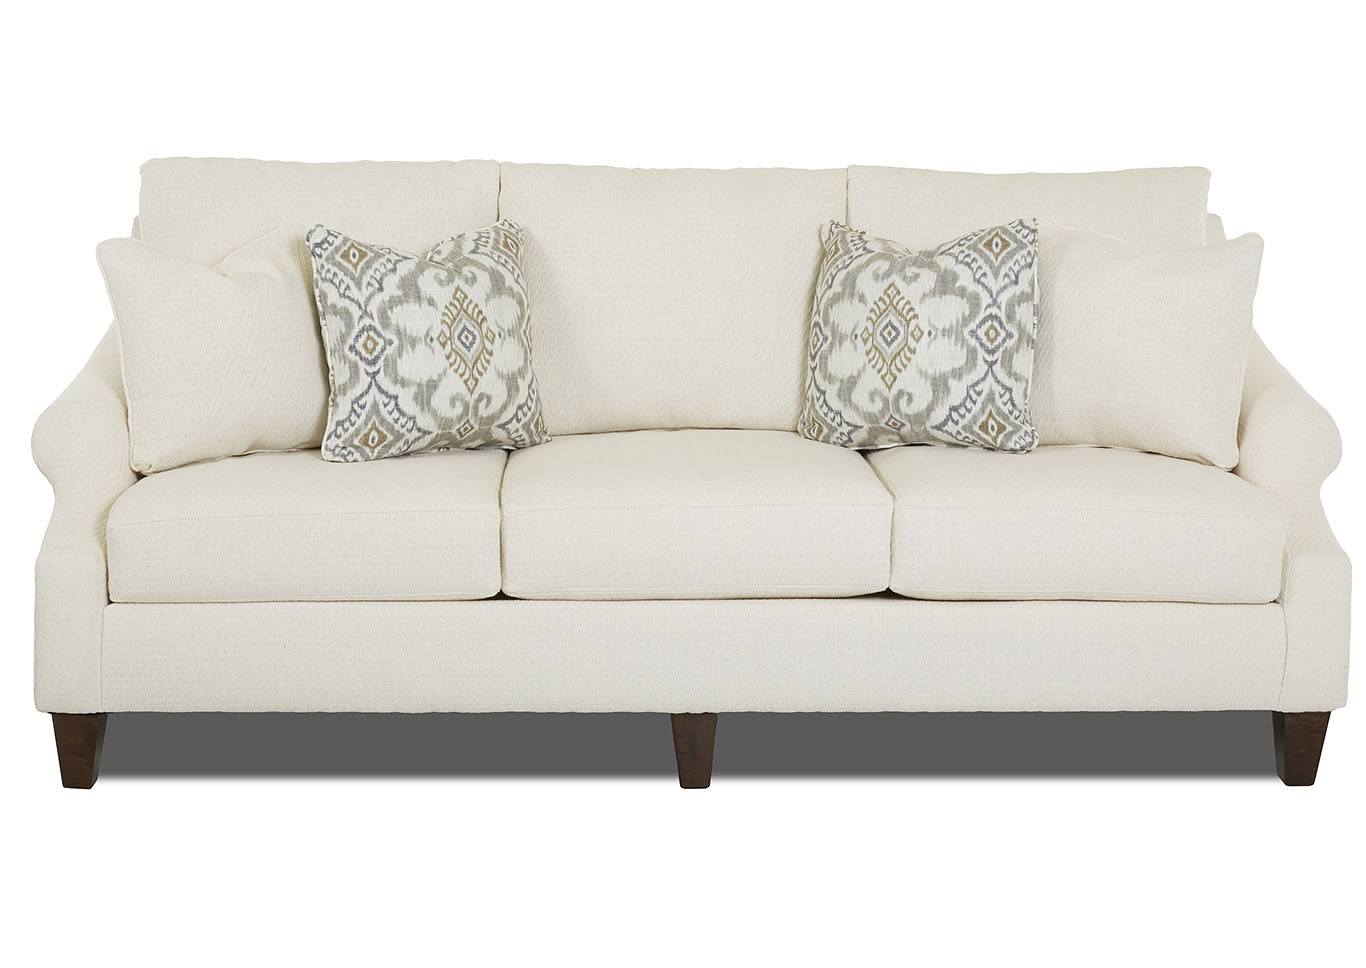 Lyndon Natural Stationary Fabric Sofa,Klaussner Home Furnishings